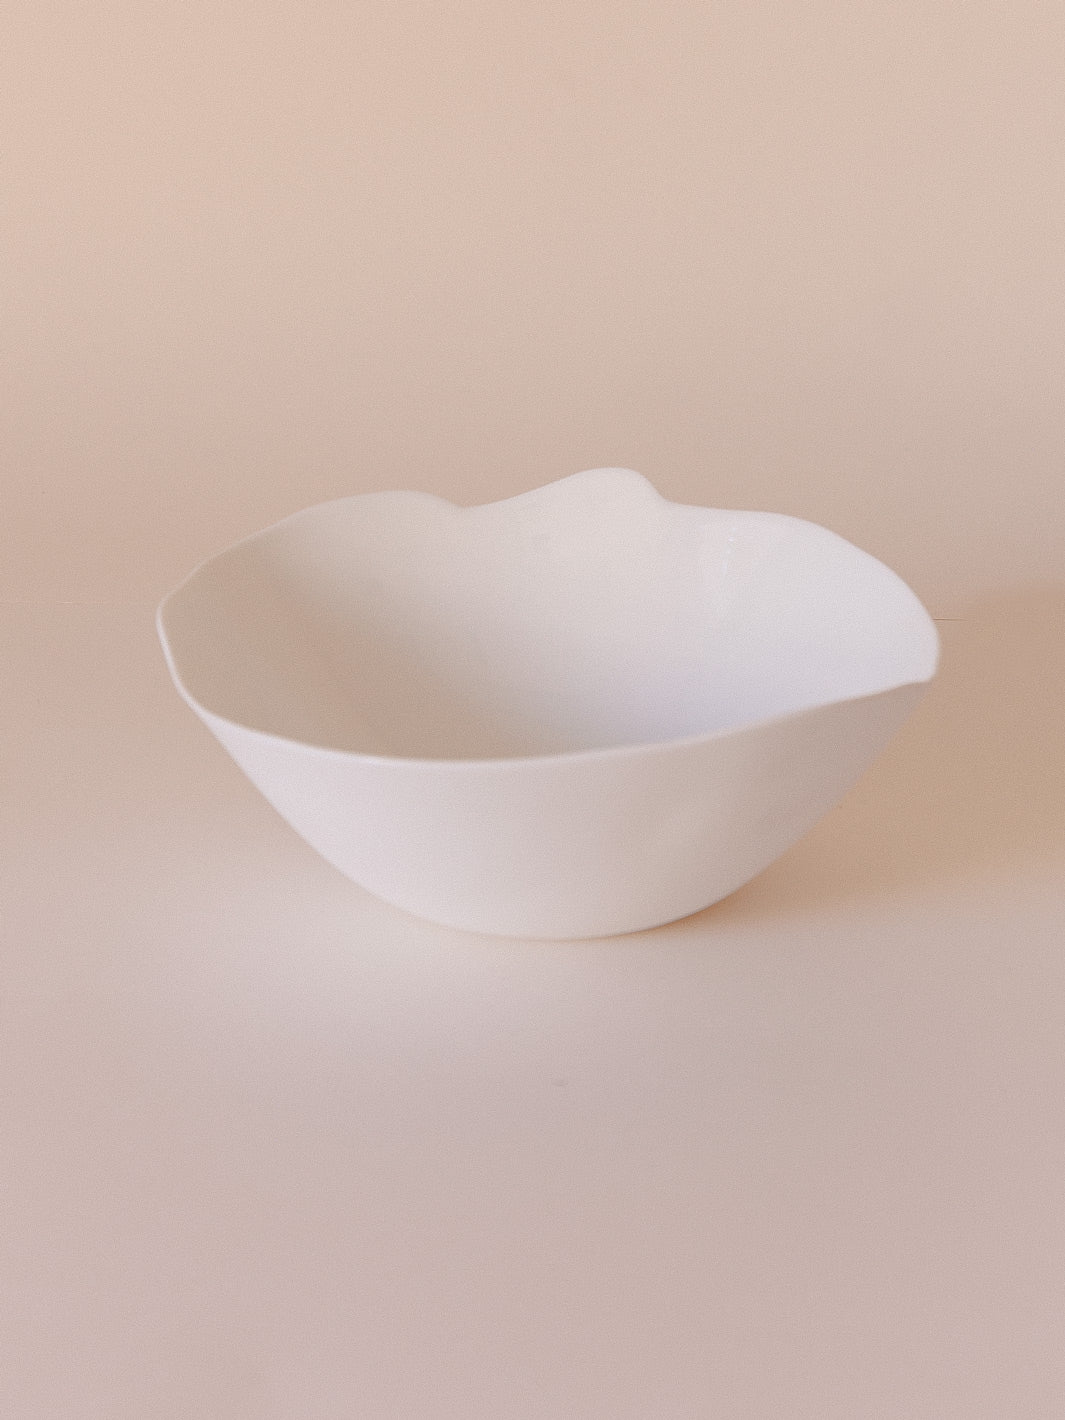 Salad bowl "Perfect Imperfection" by Roos Van de Velde